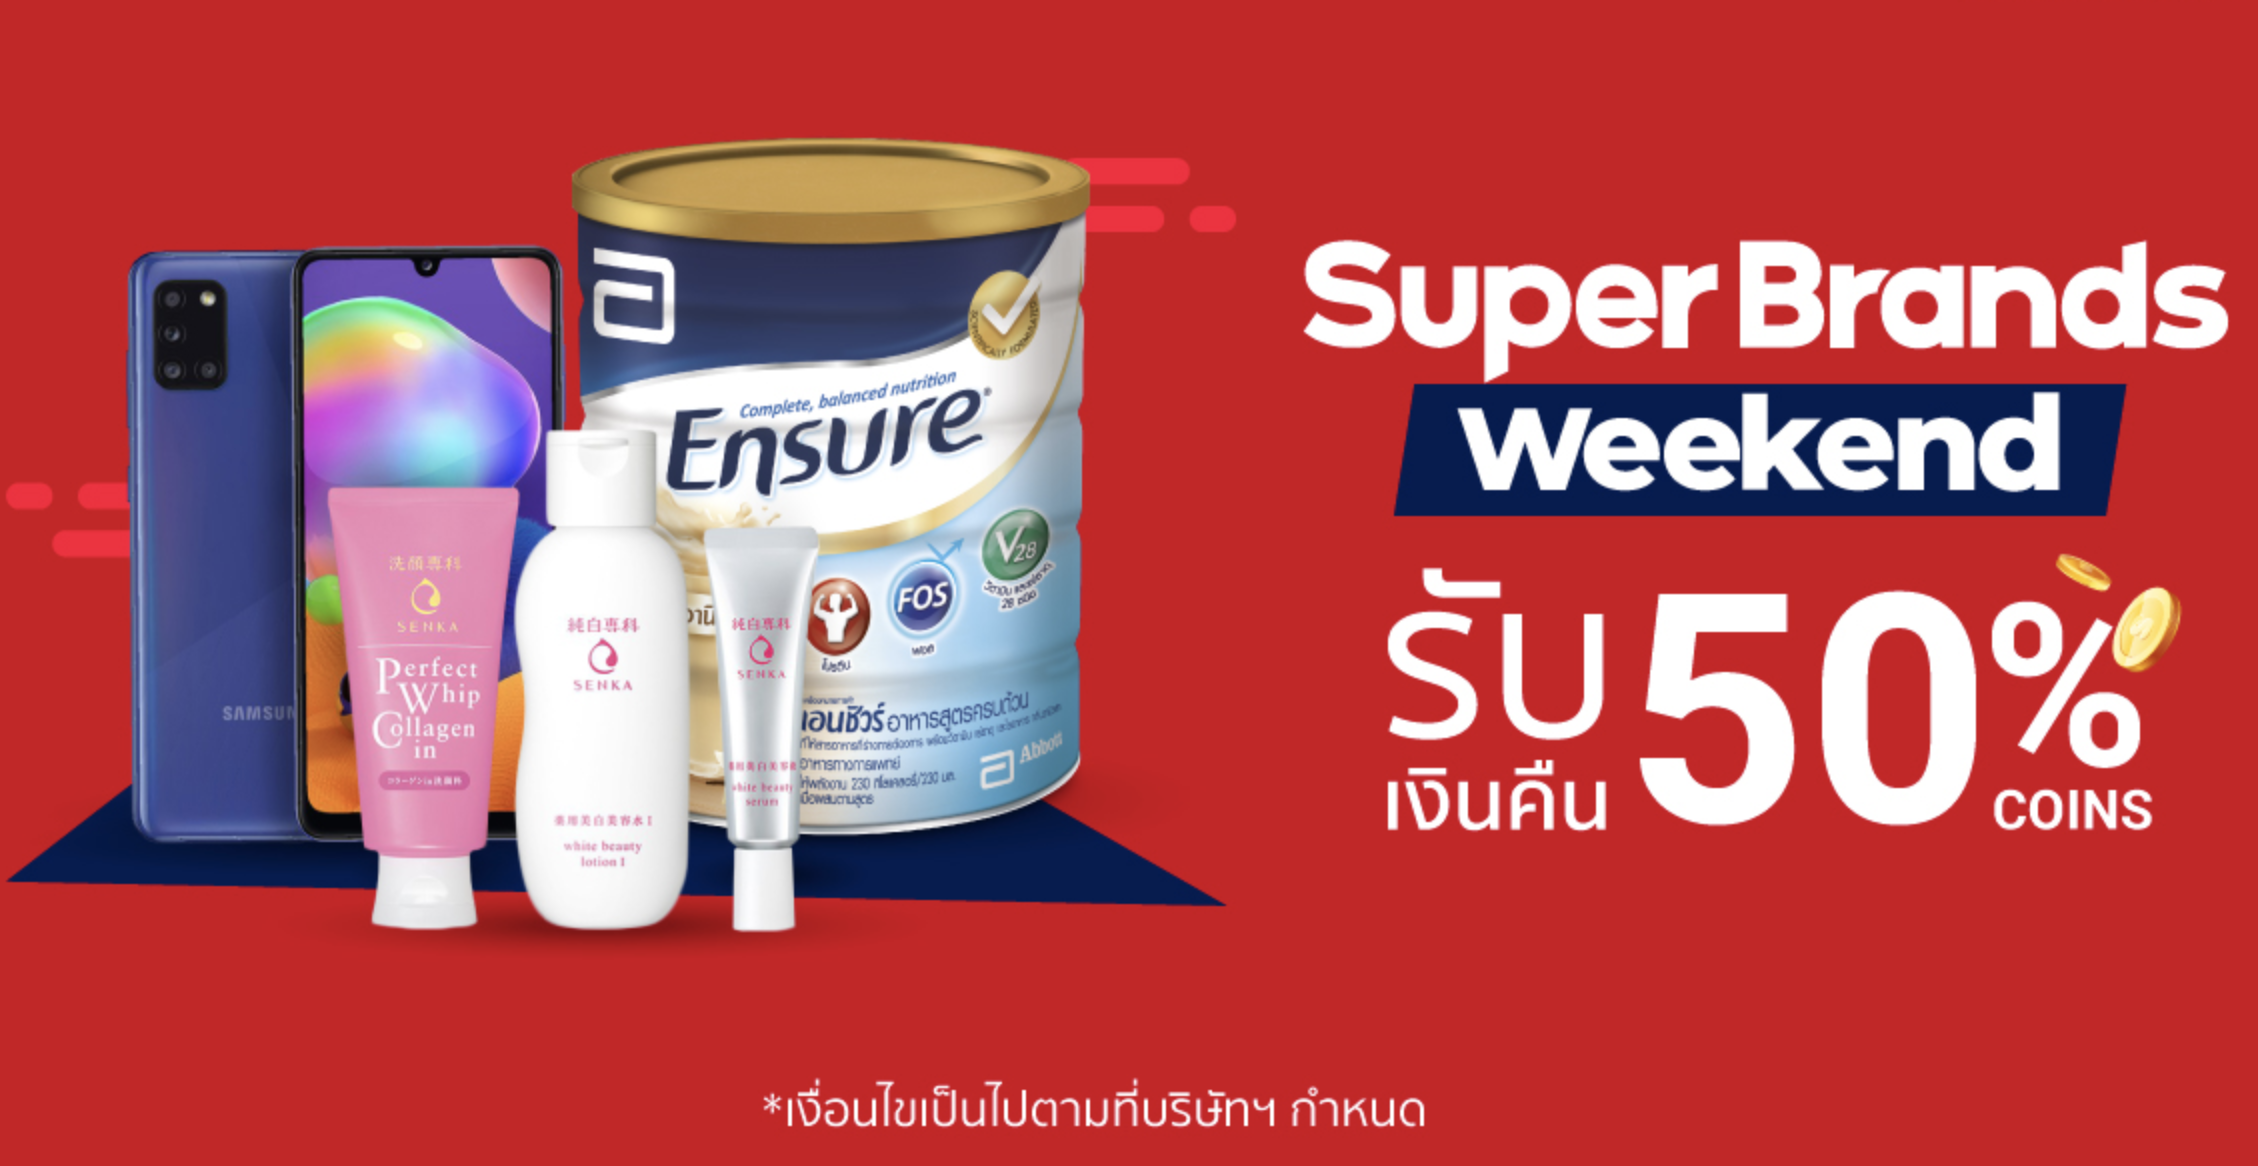 Shopee - Super Brands Weekend รับเงินคืนสูงสุด 50%